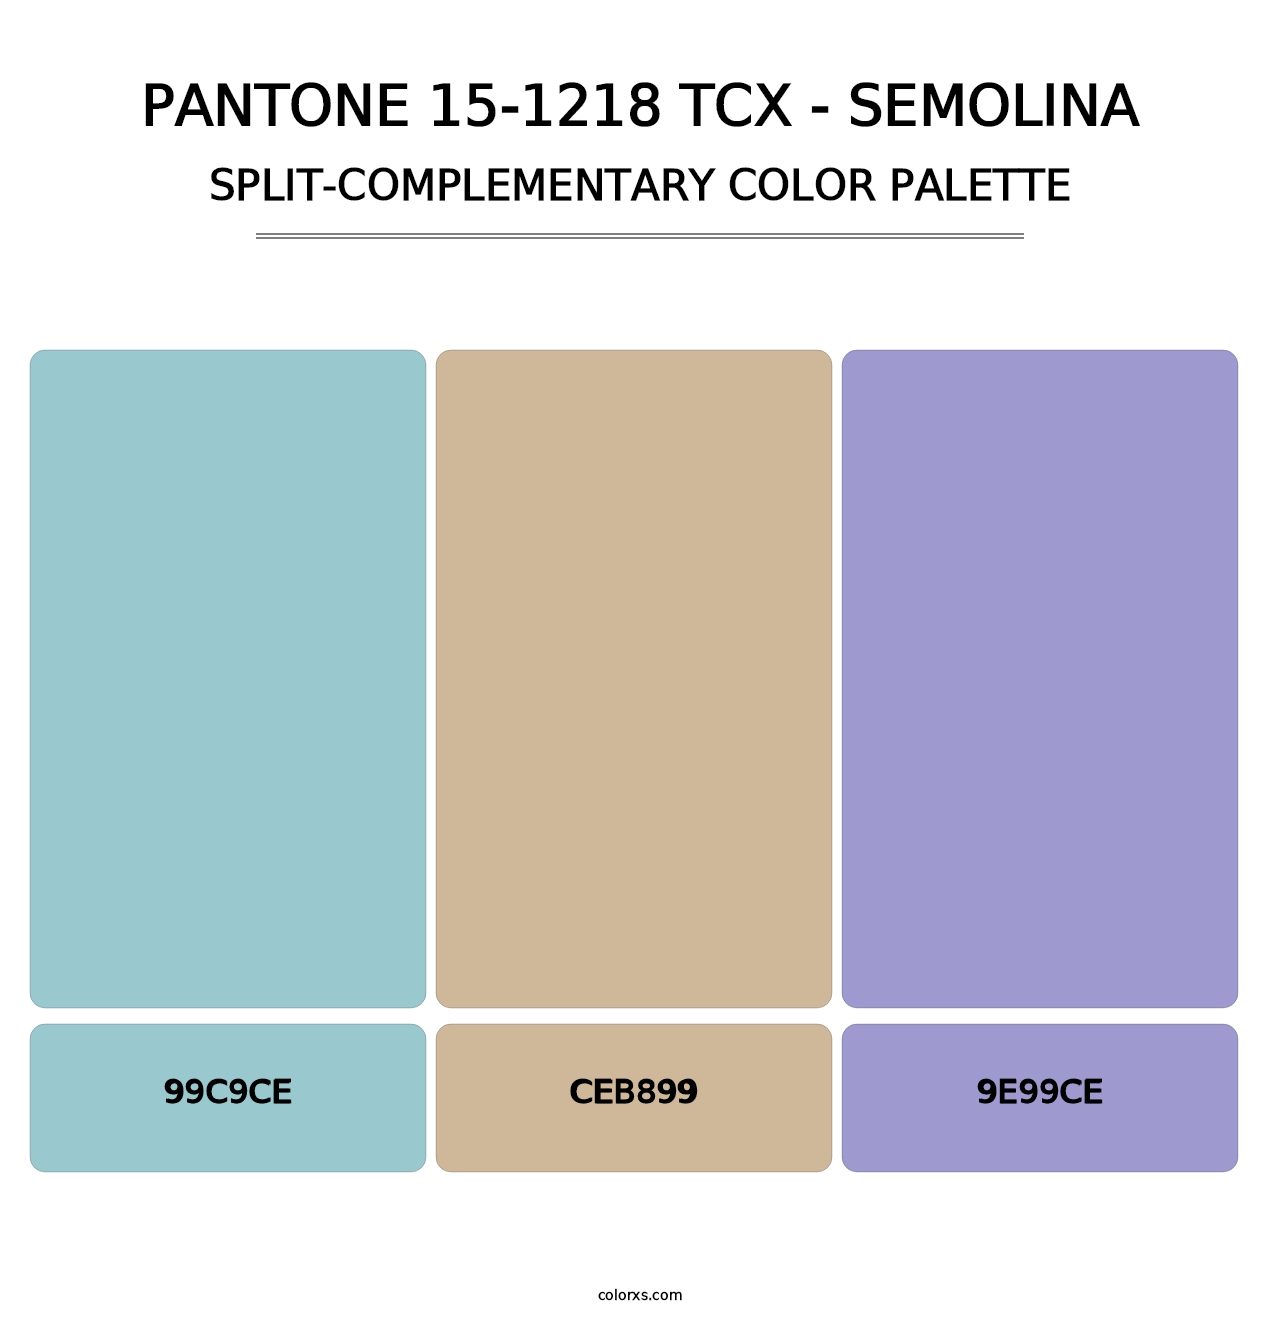 PANTONE 15-1218 TCX - Semolina - Split-Complementary Color Palette